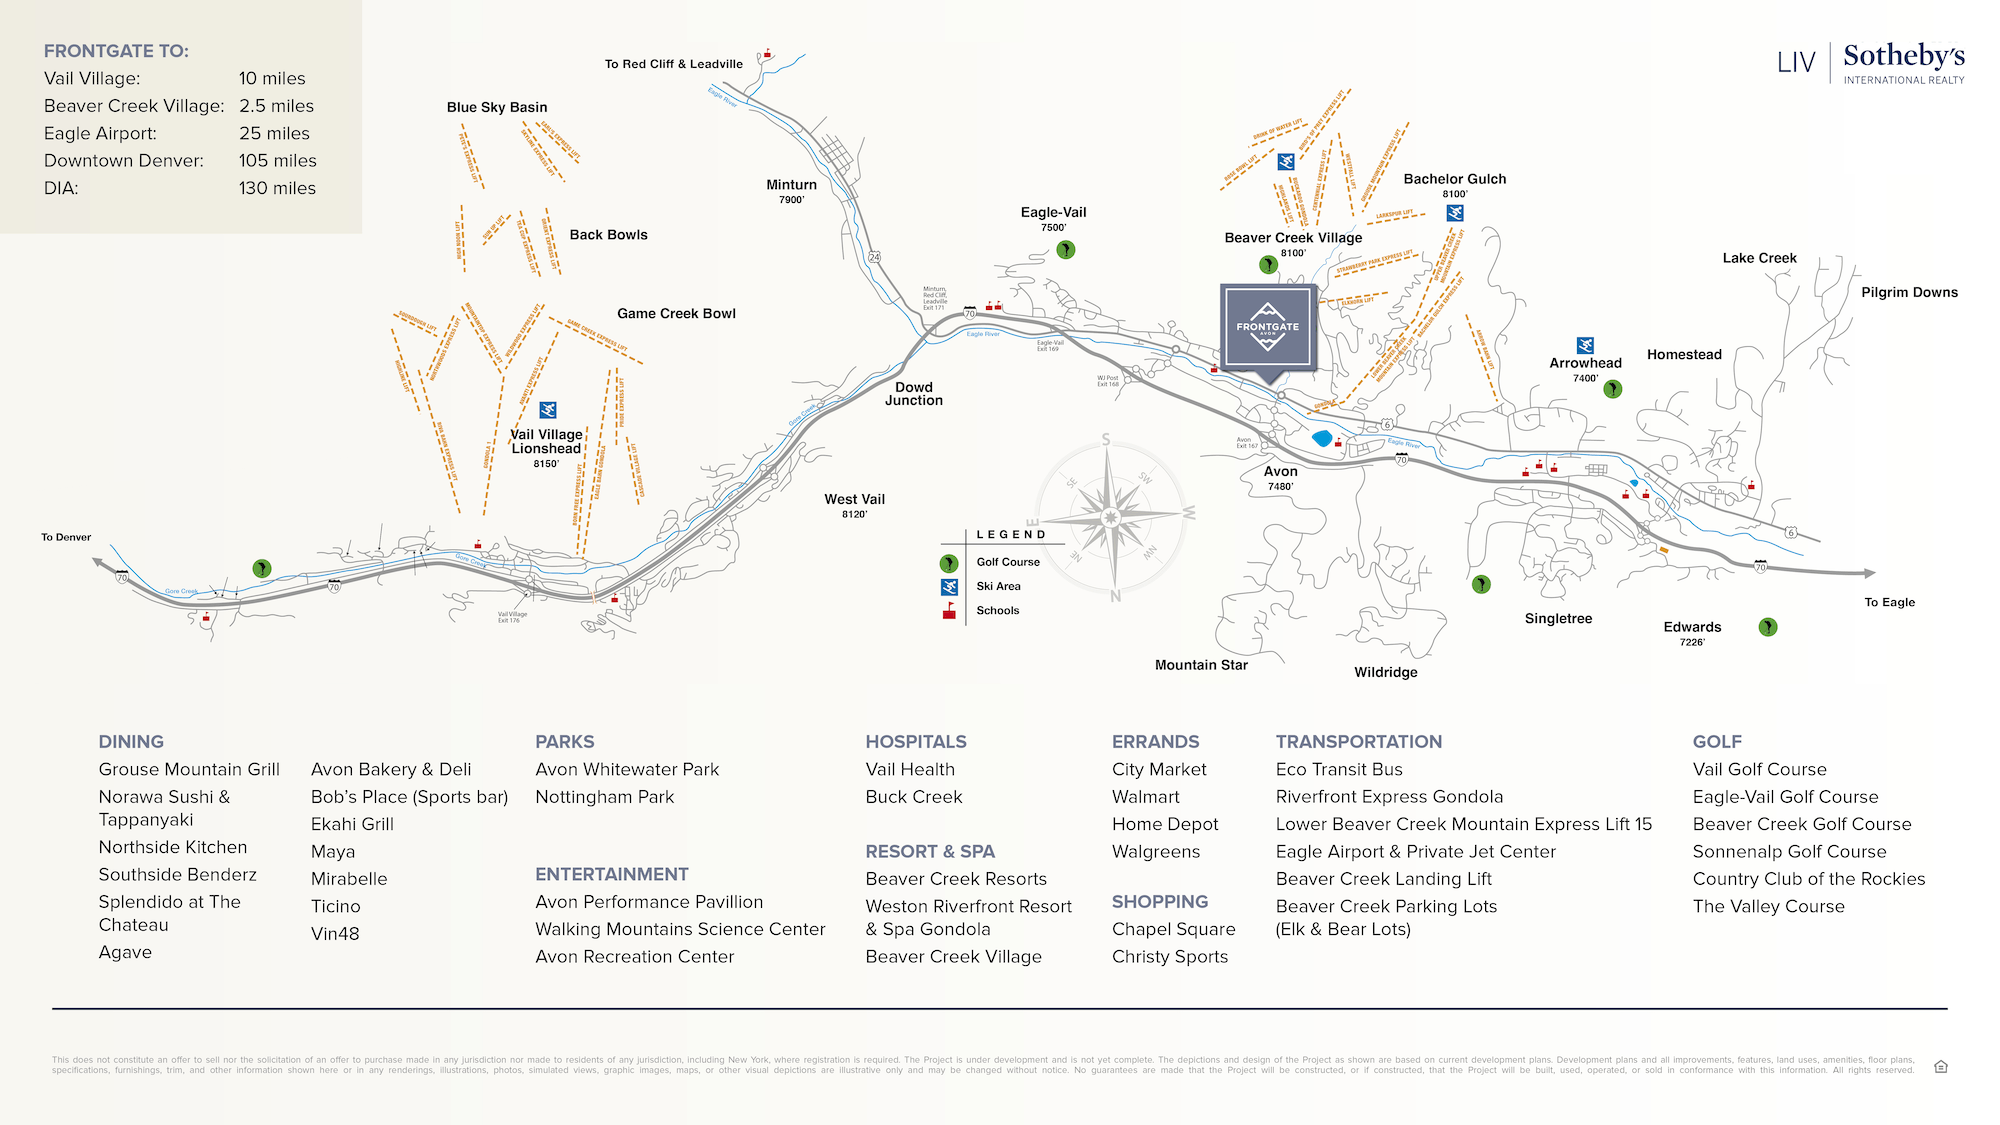 liv-sothebys-location-map